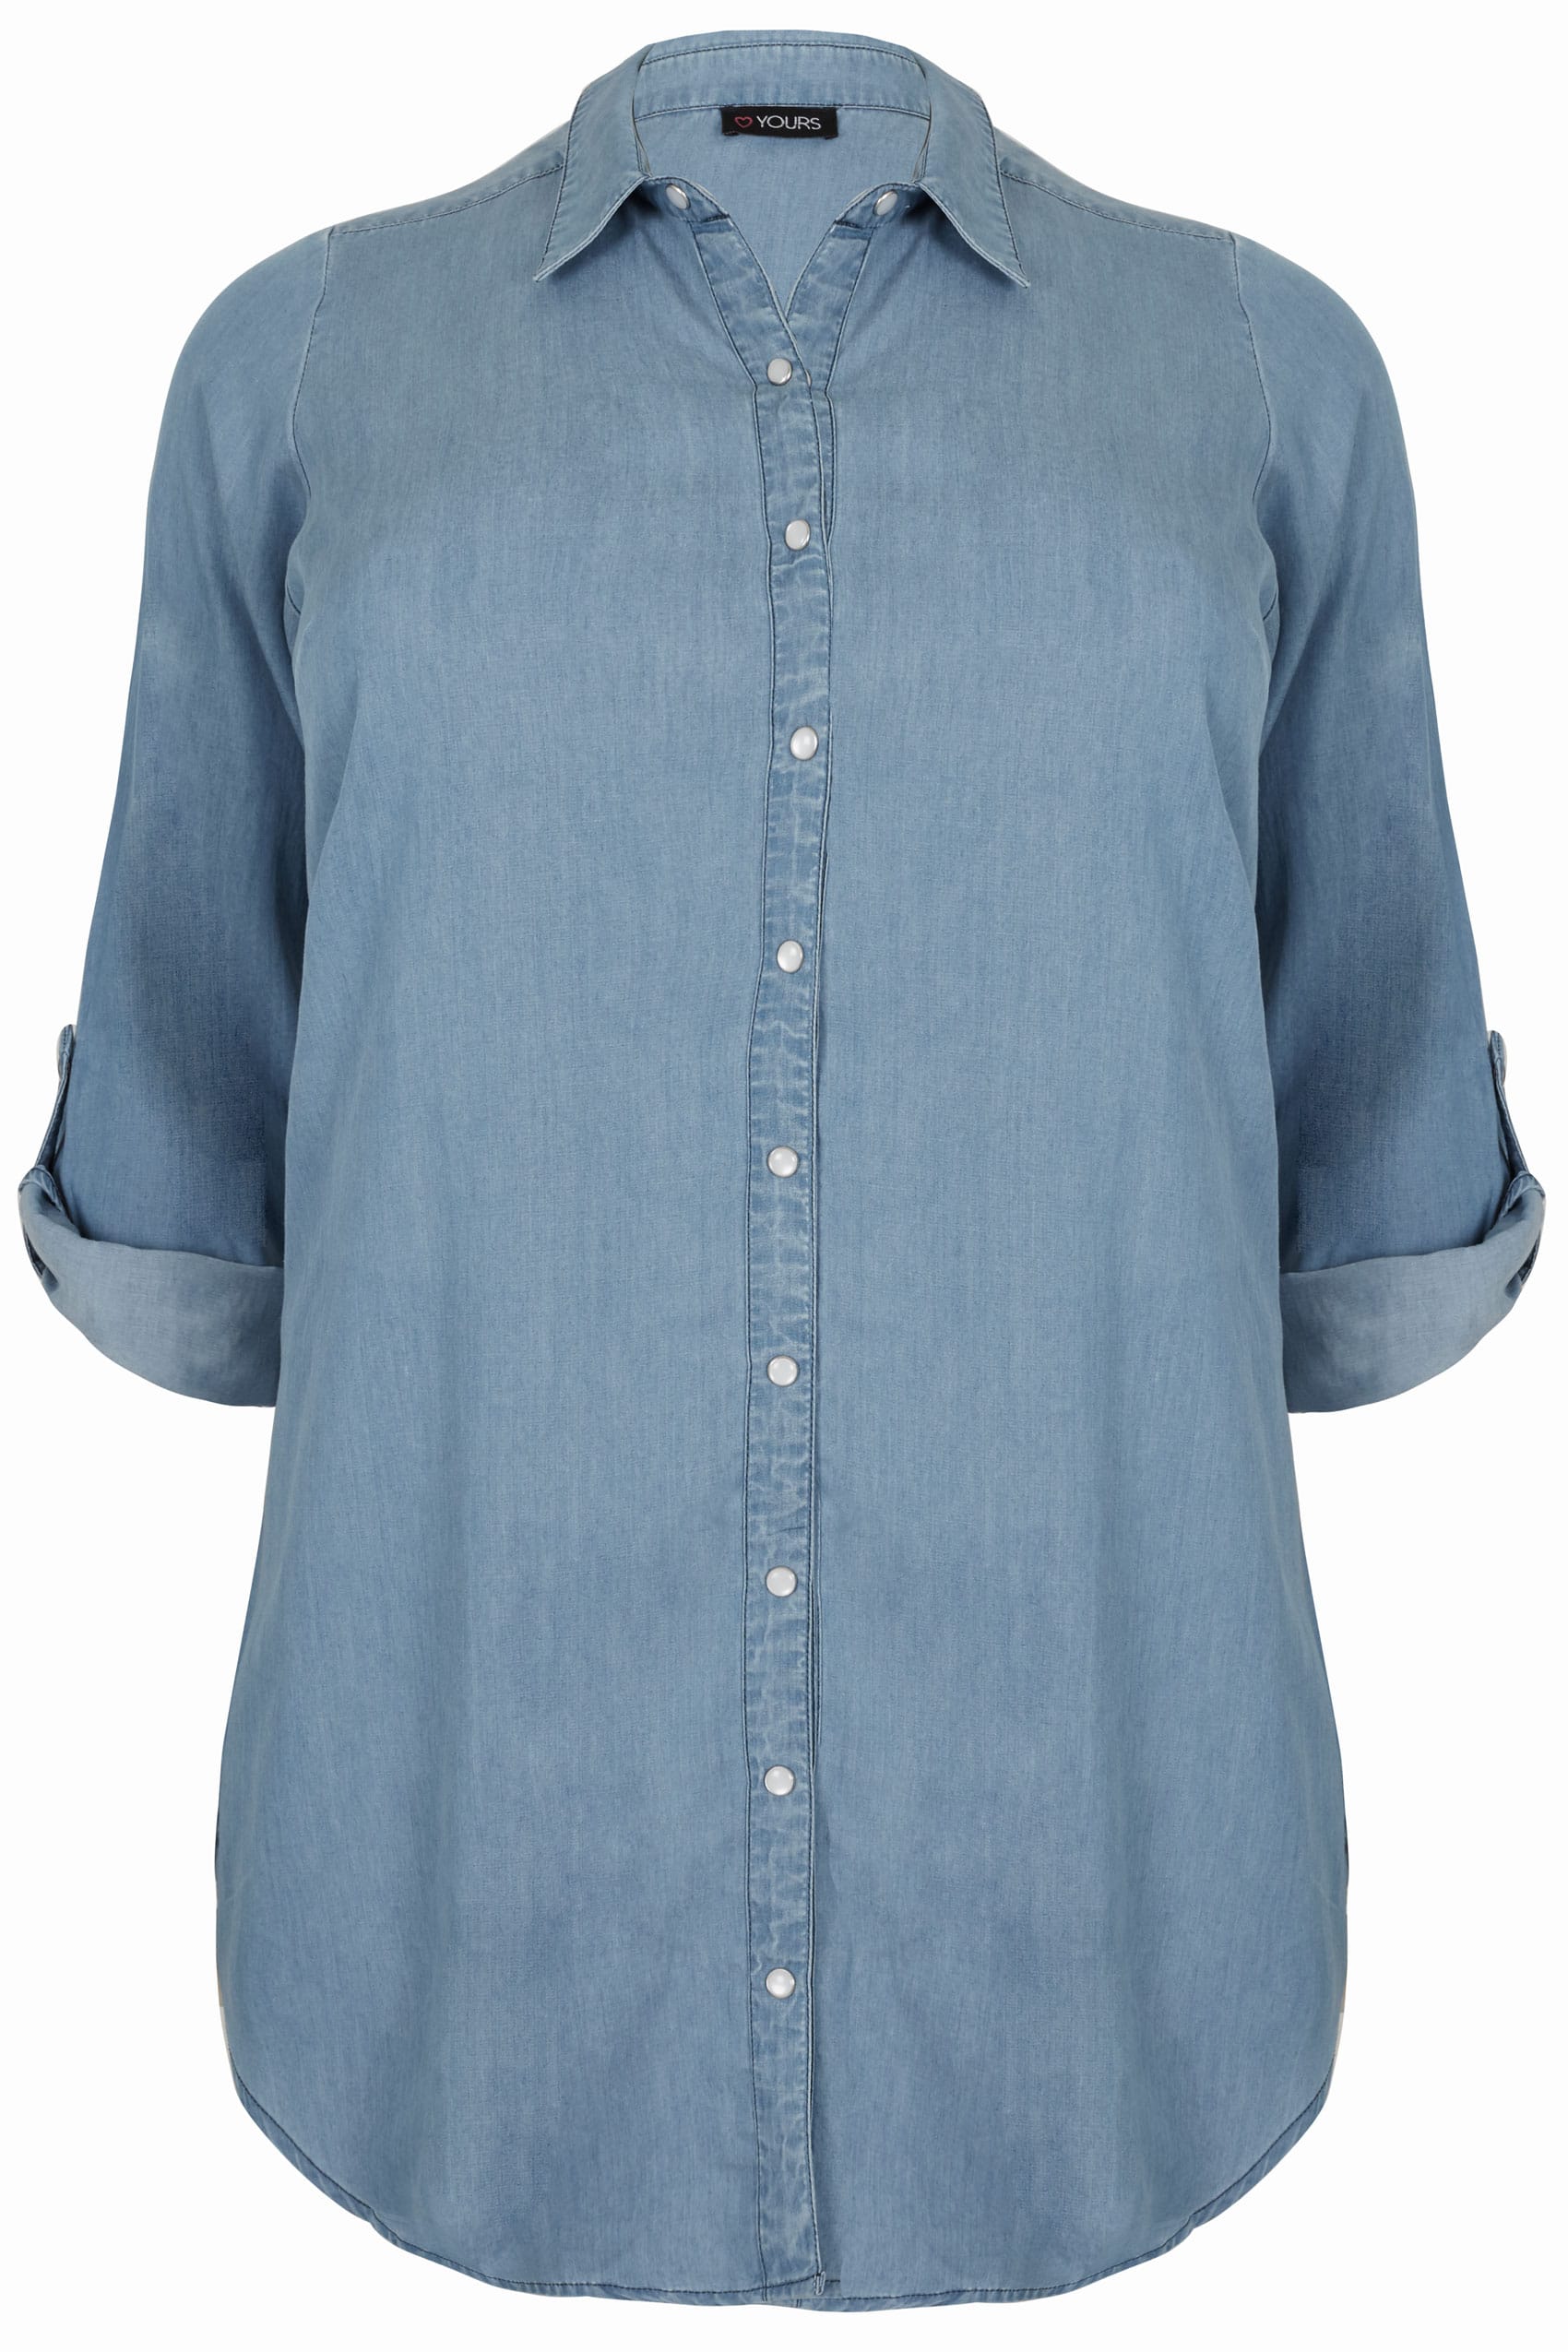 Blue Chambray Denim Shirt, Plus size 16 to 36